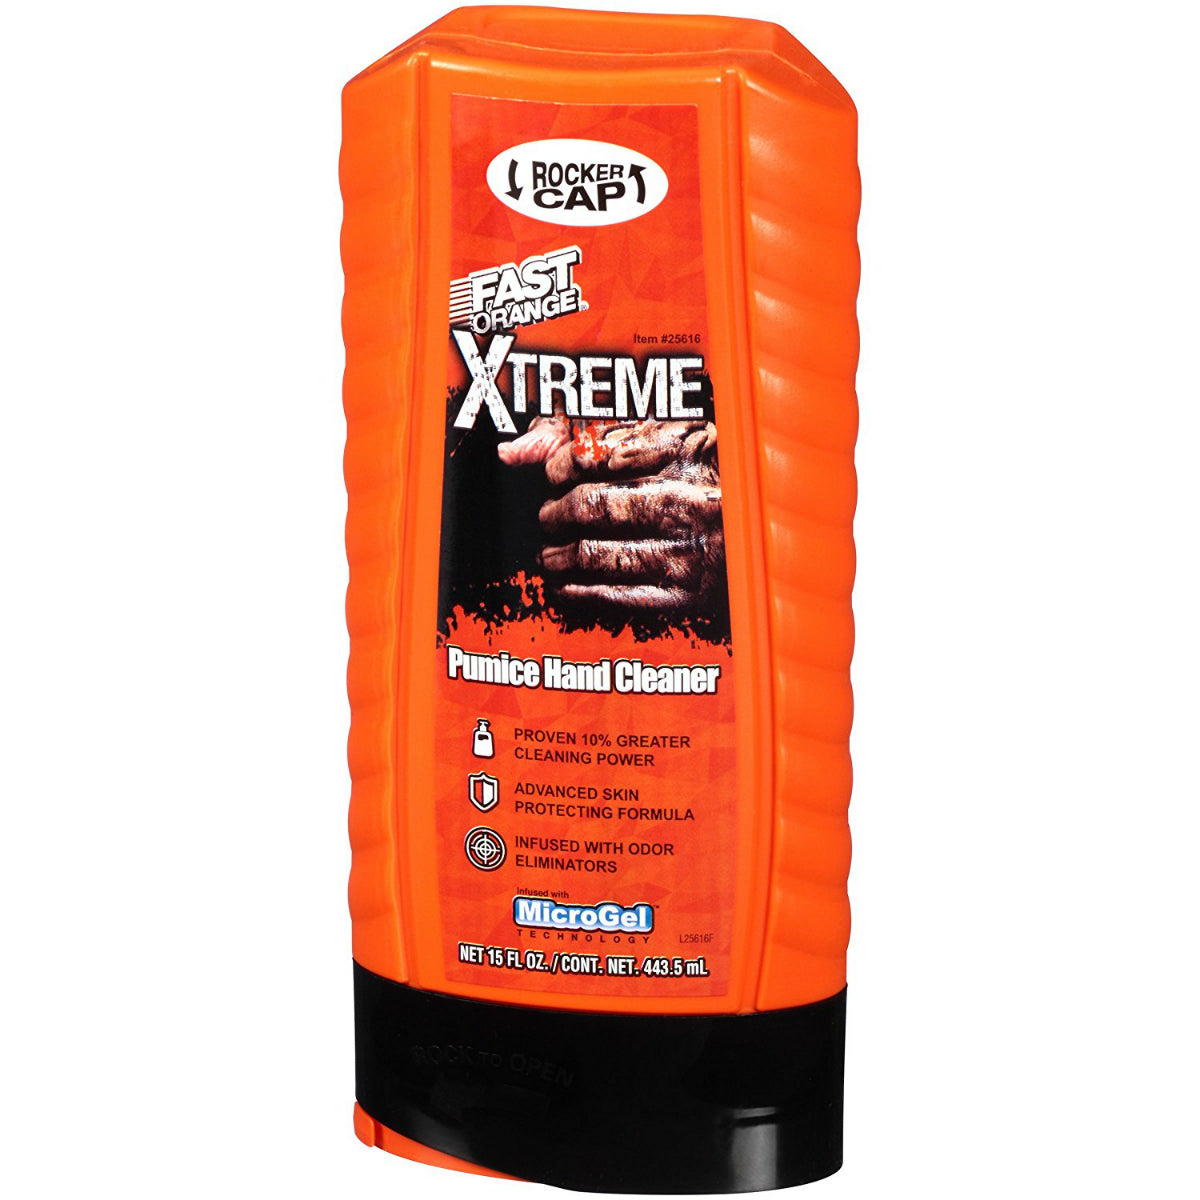 Fast Orange® 25616 Xtreme Professional Grade Hand Cleaner w/ Rocker Cap™, 15 Oz